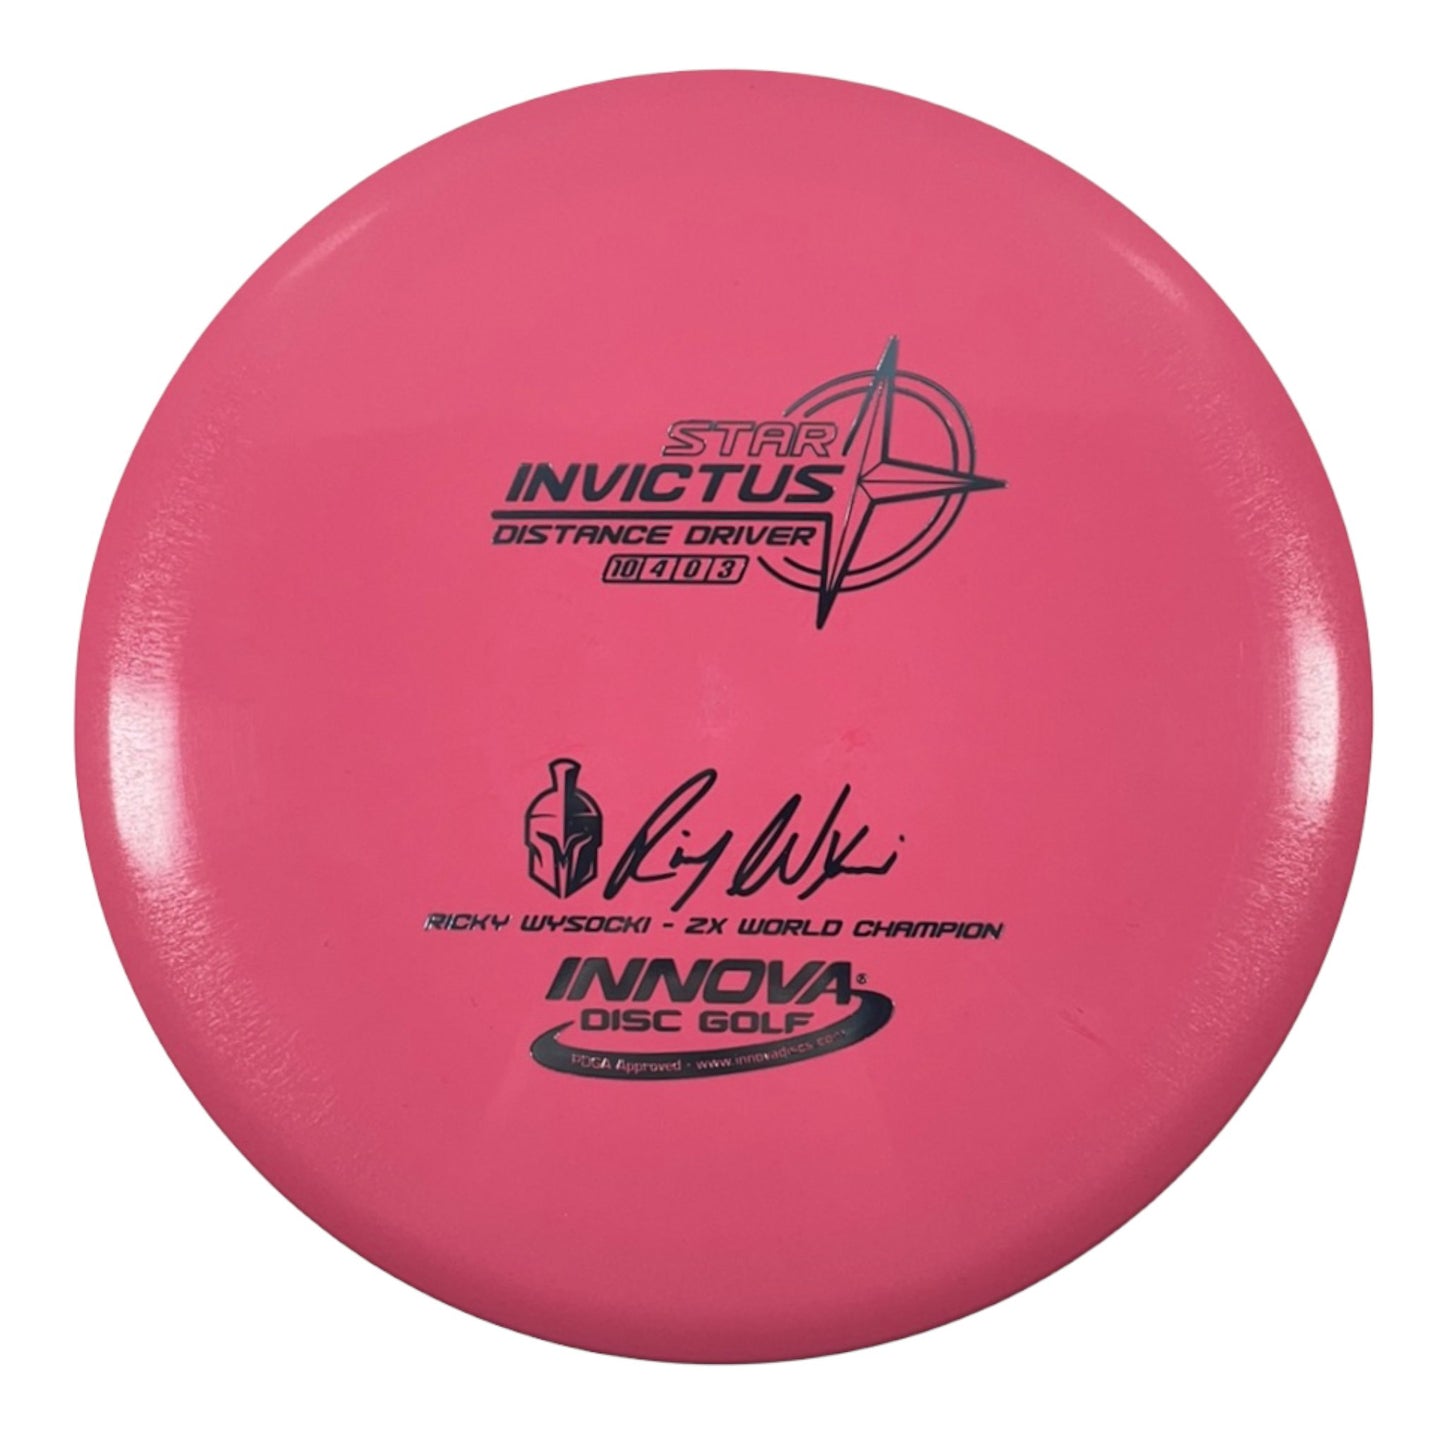 Innova Champion Discs Invictus | Star | Pink/Silver 171g-172g (Ricky Wysocki) Disc Golf